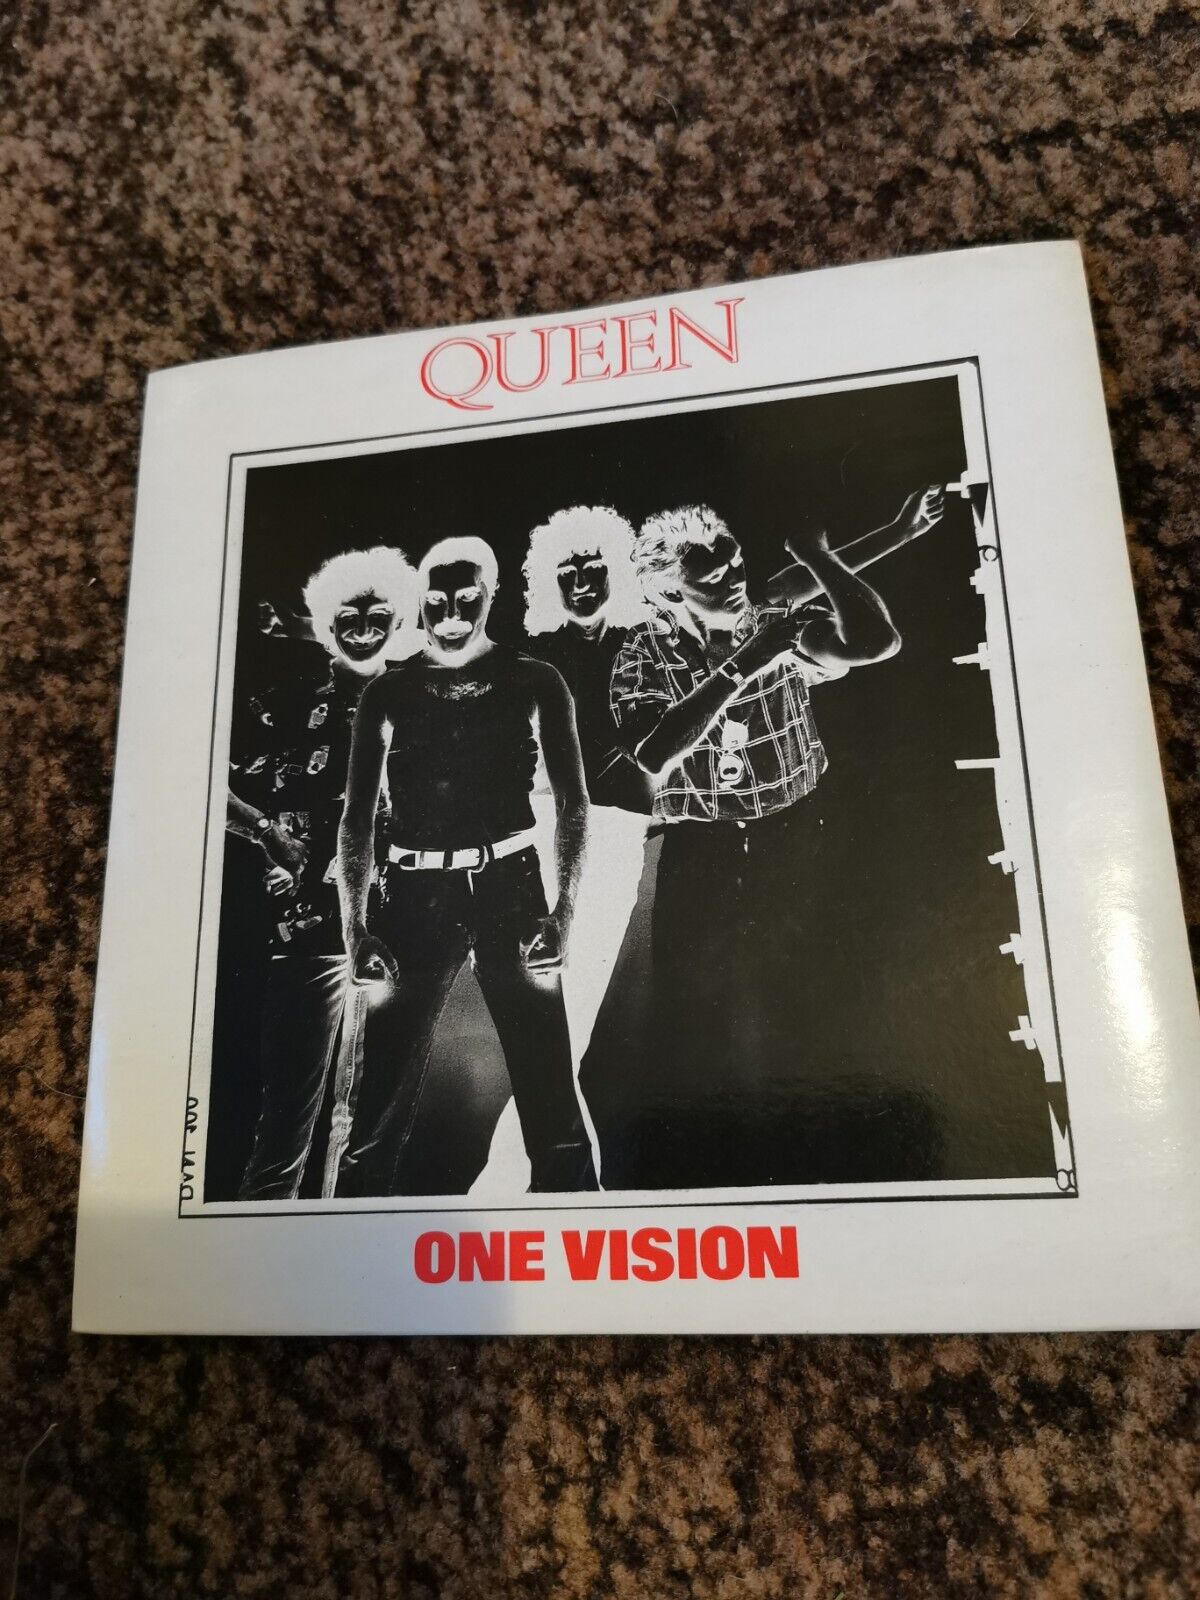 Queen - One Vision 7" Vinyl Single